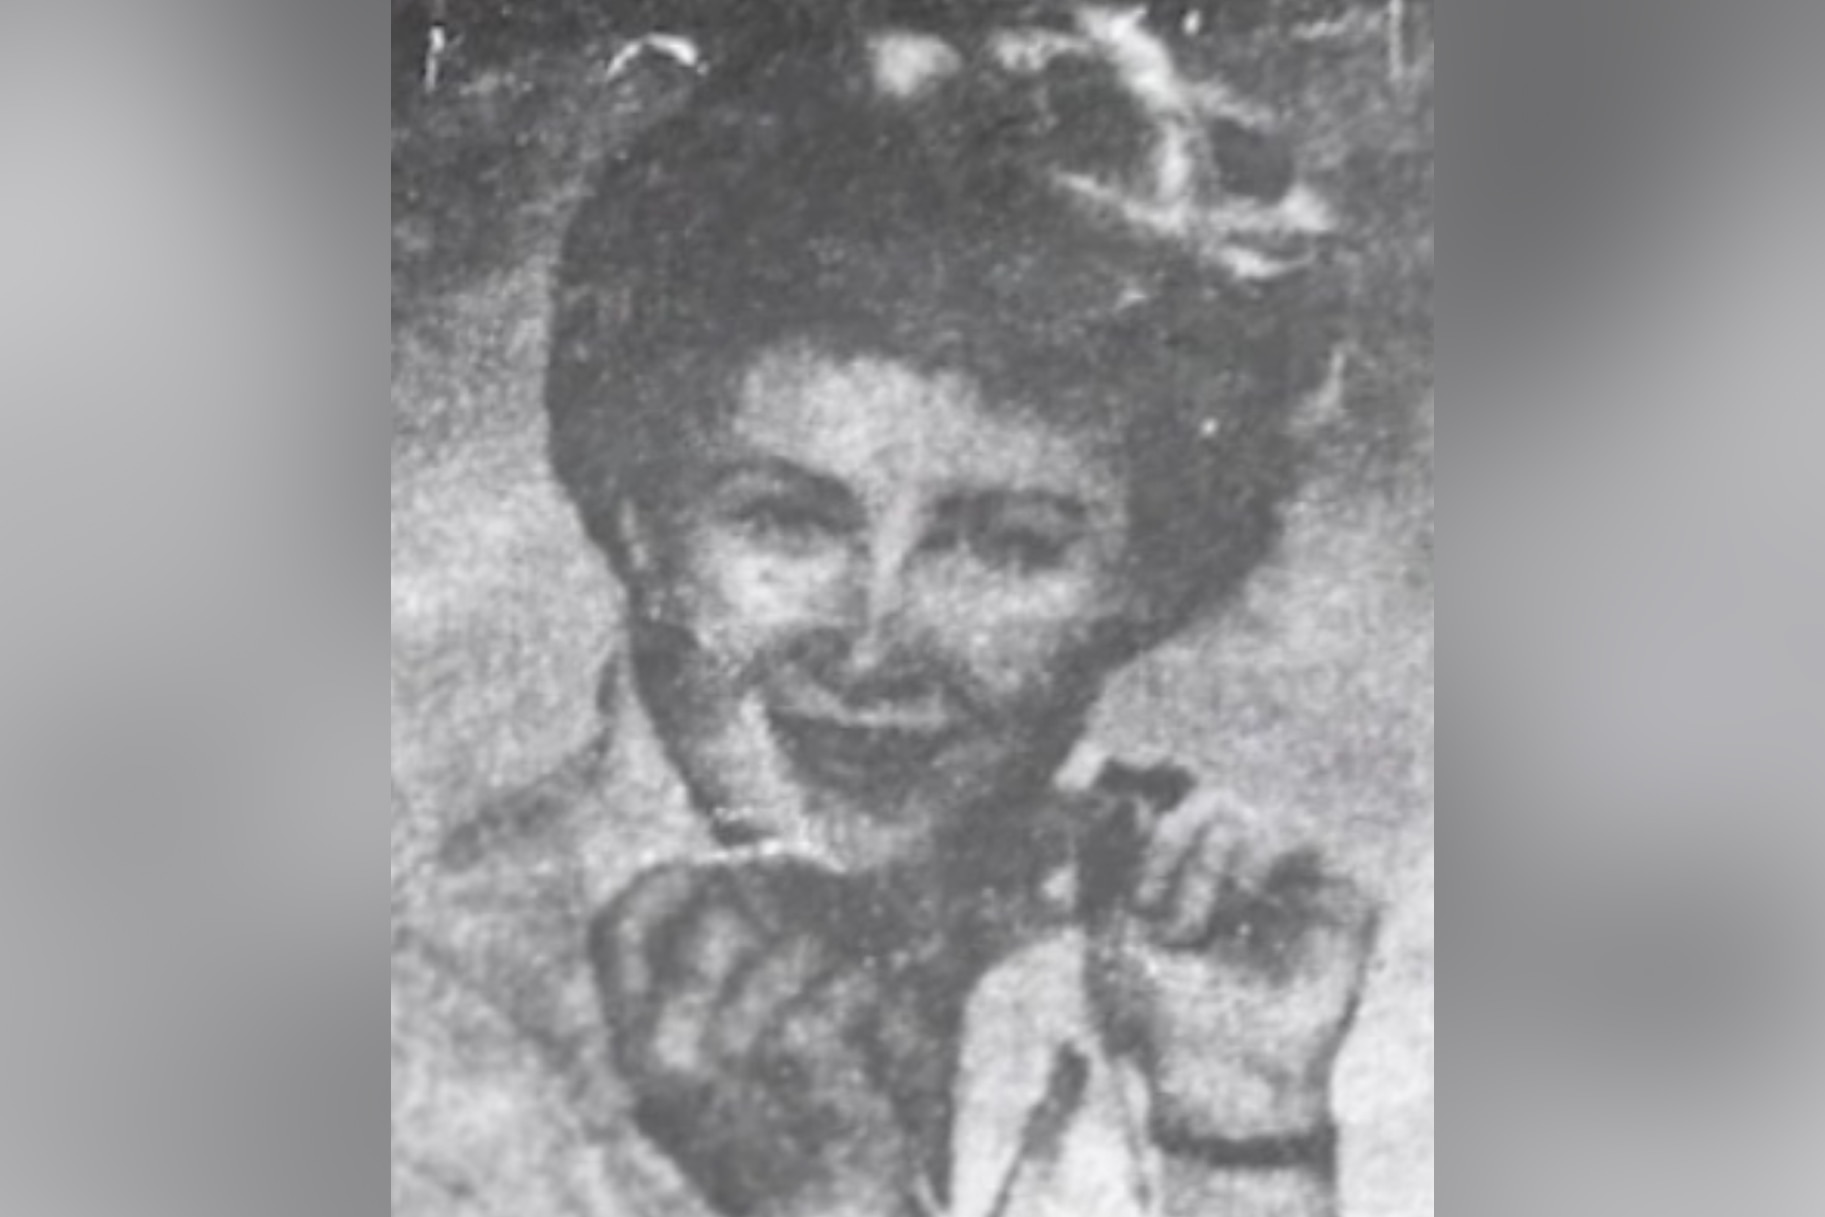 "Christmas Tree Lady" Jane Doe has been identified as Joyce Marilyn Meyer Sommers